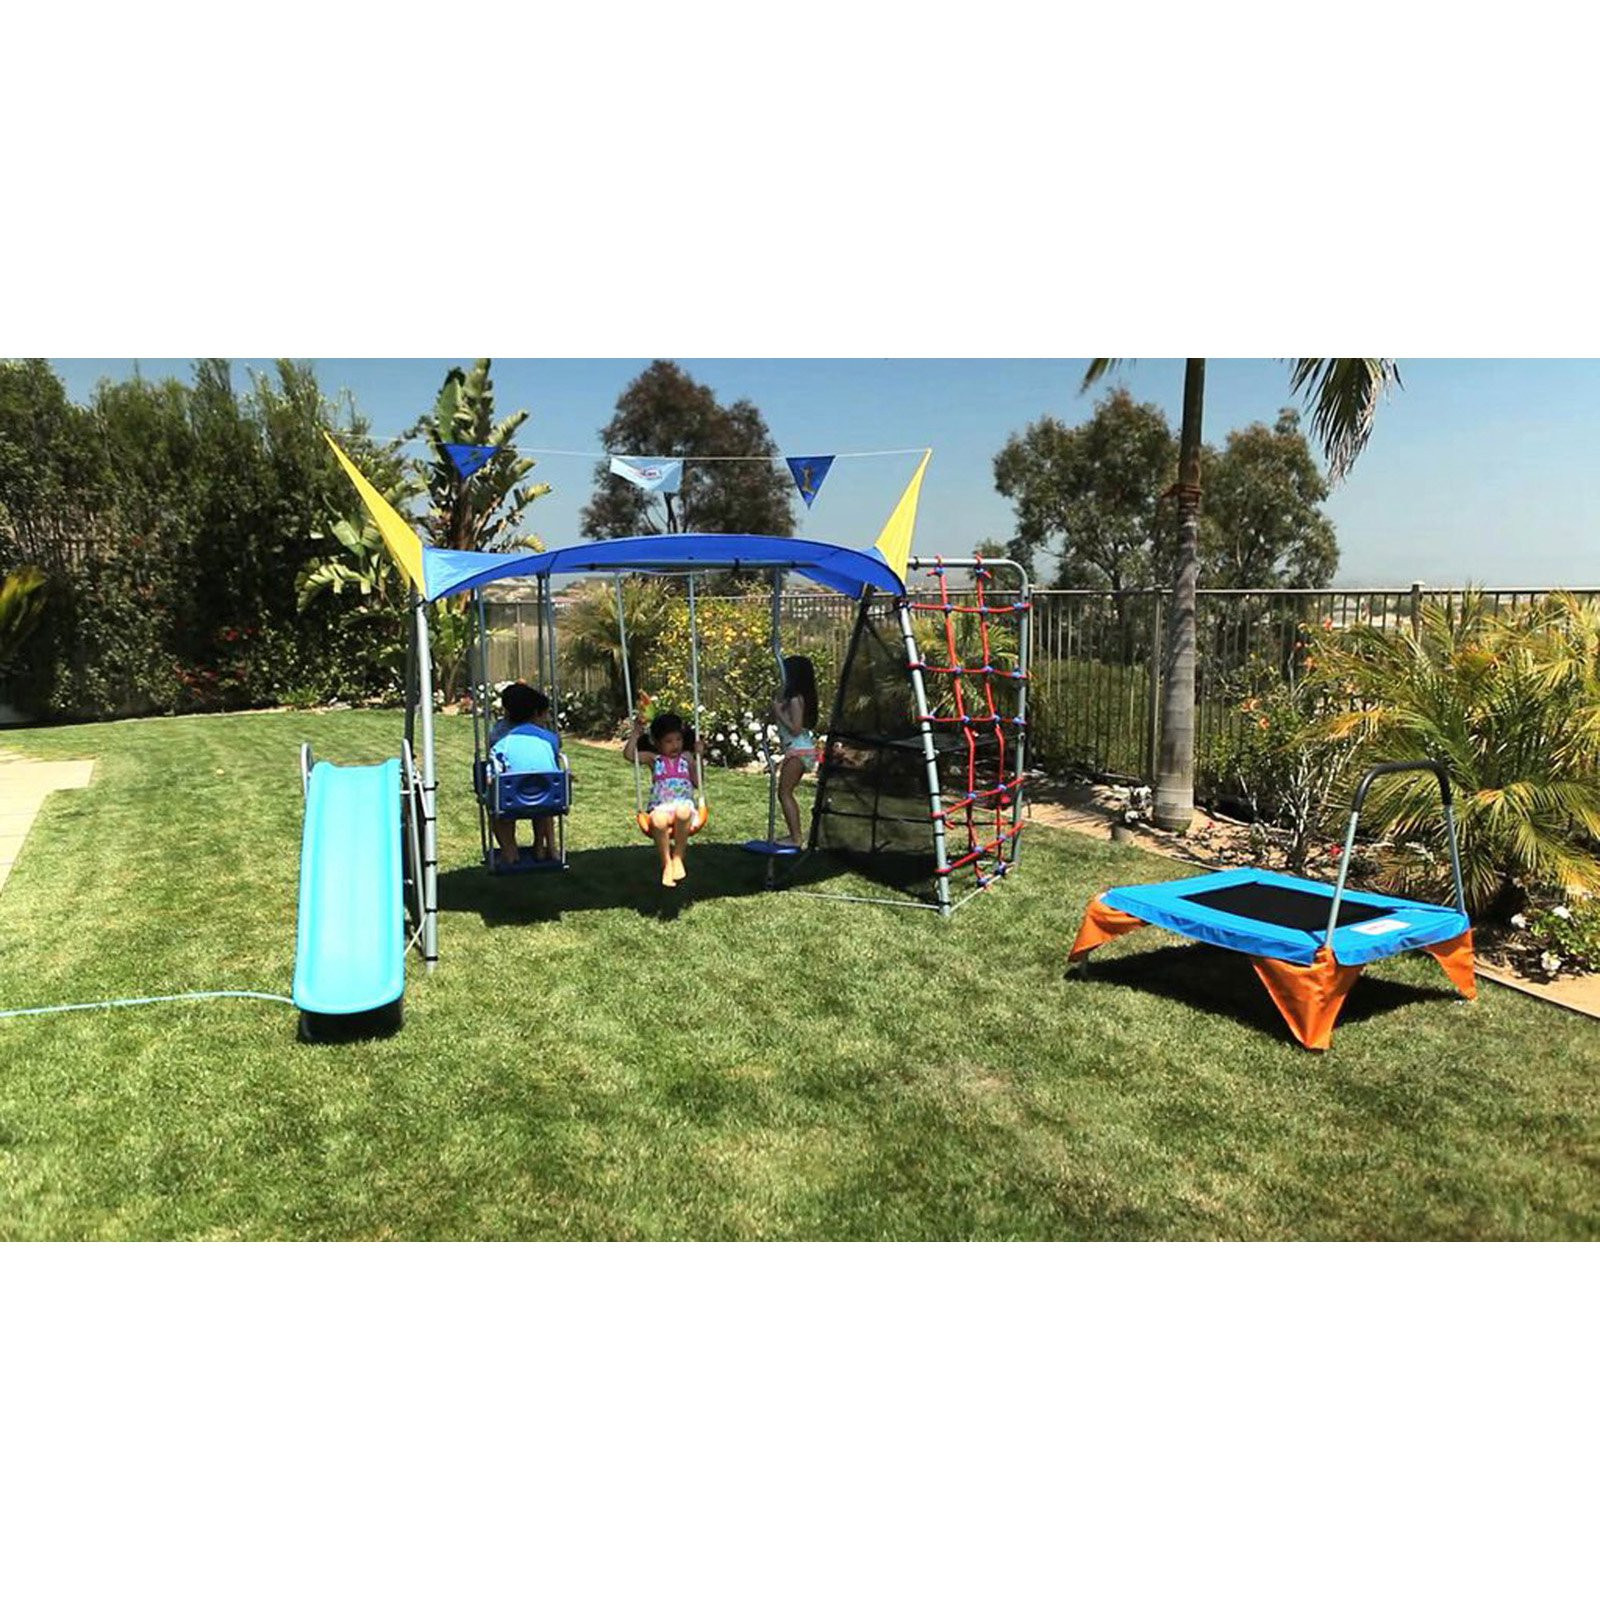 Iron Kids Swing Sets
 IronKids Premier 650 plete Fitness Playground Swing Set